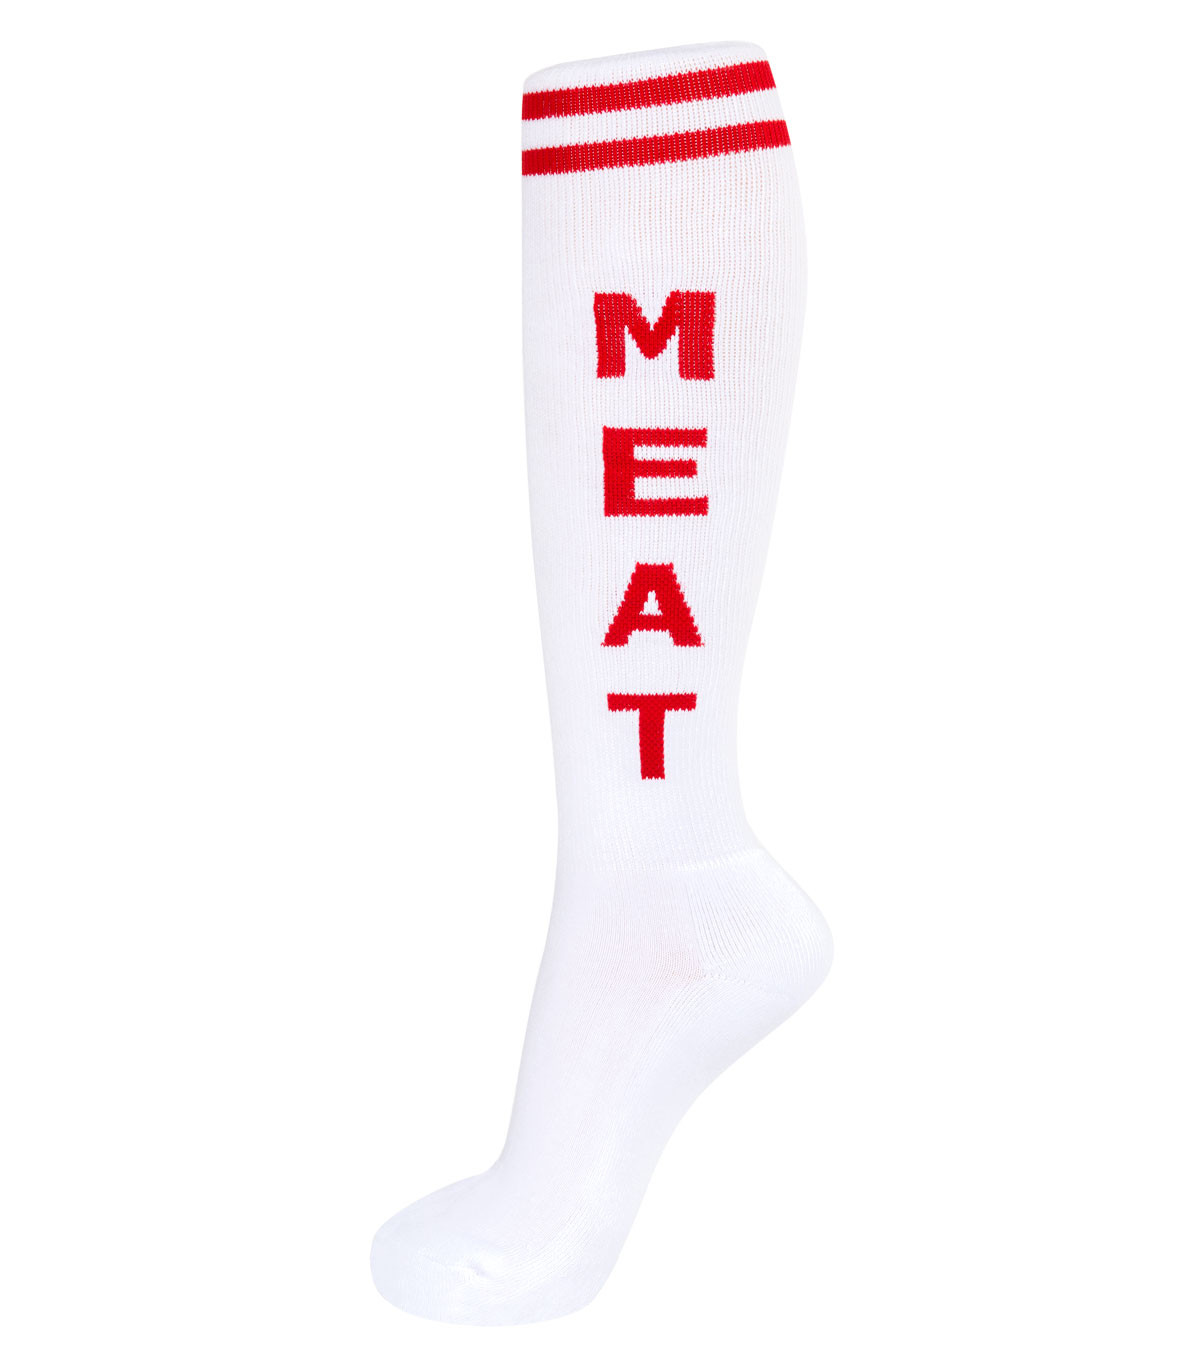 Meat' Novelty Socks - Bifanas, Iberica, 'Meat' Novelty Socks